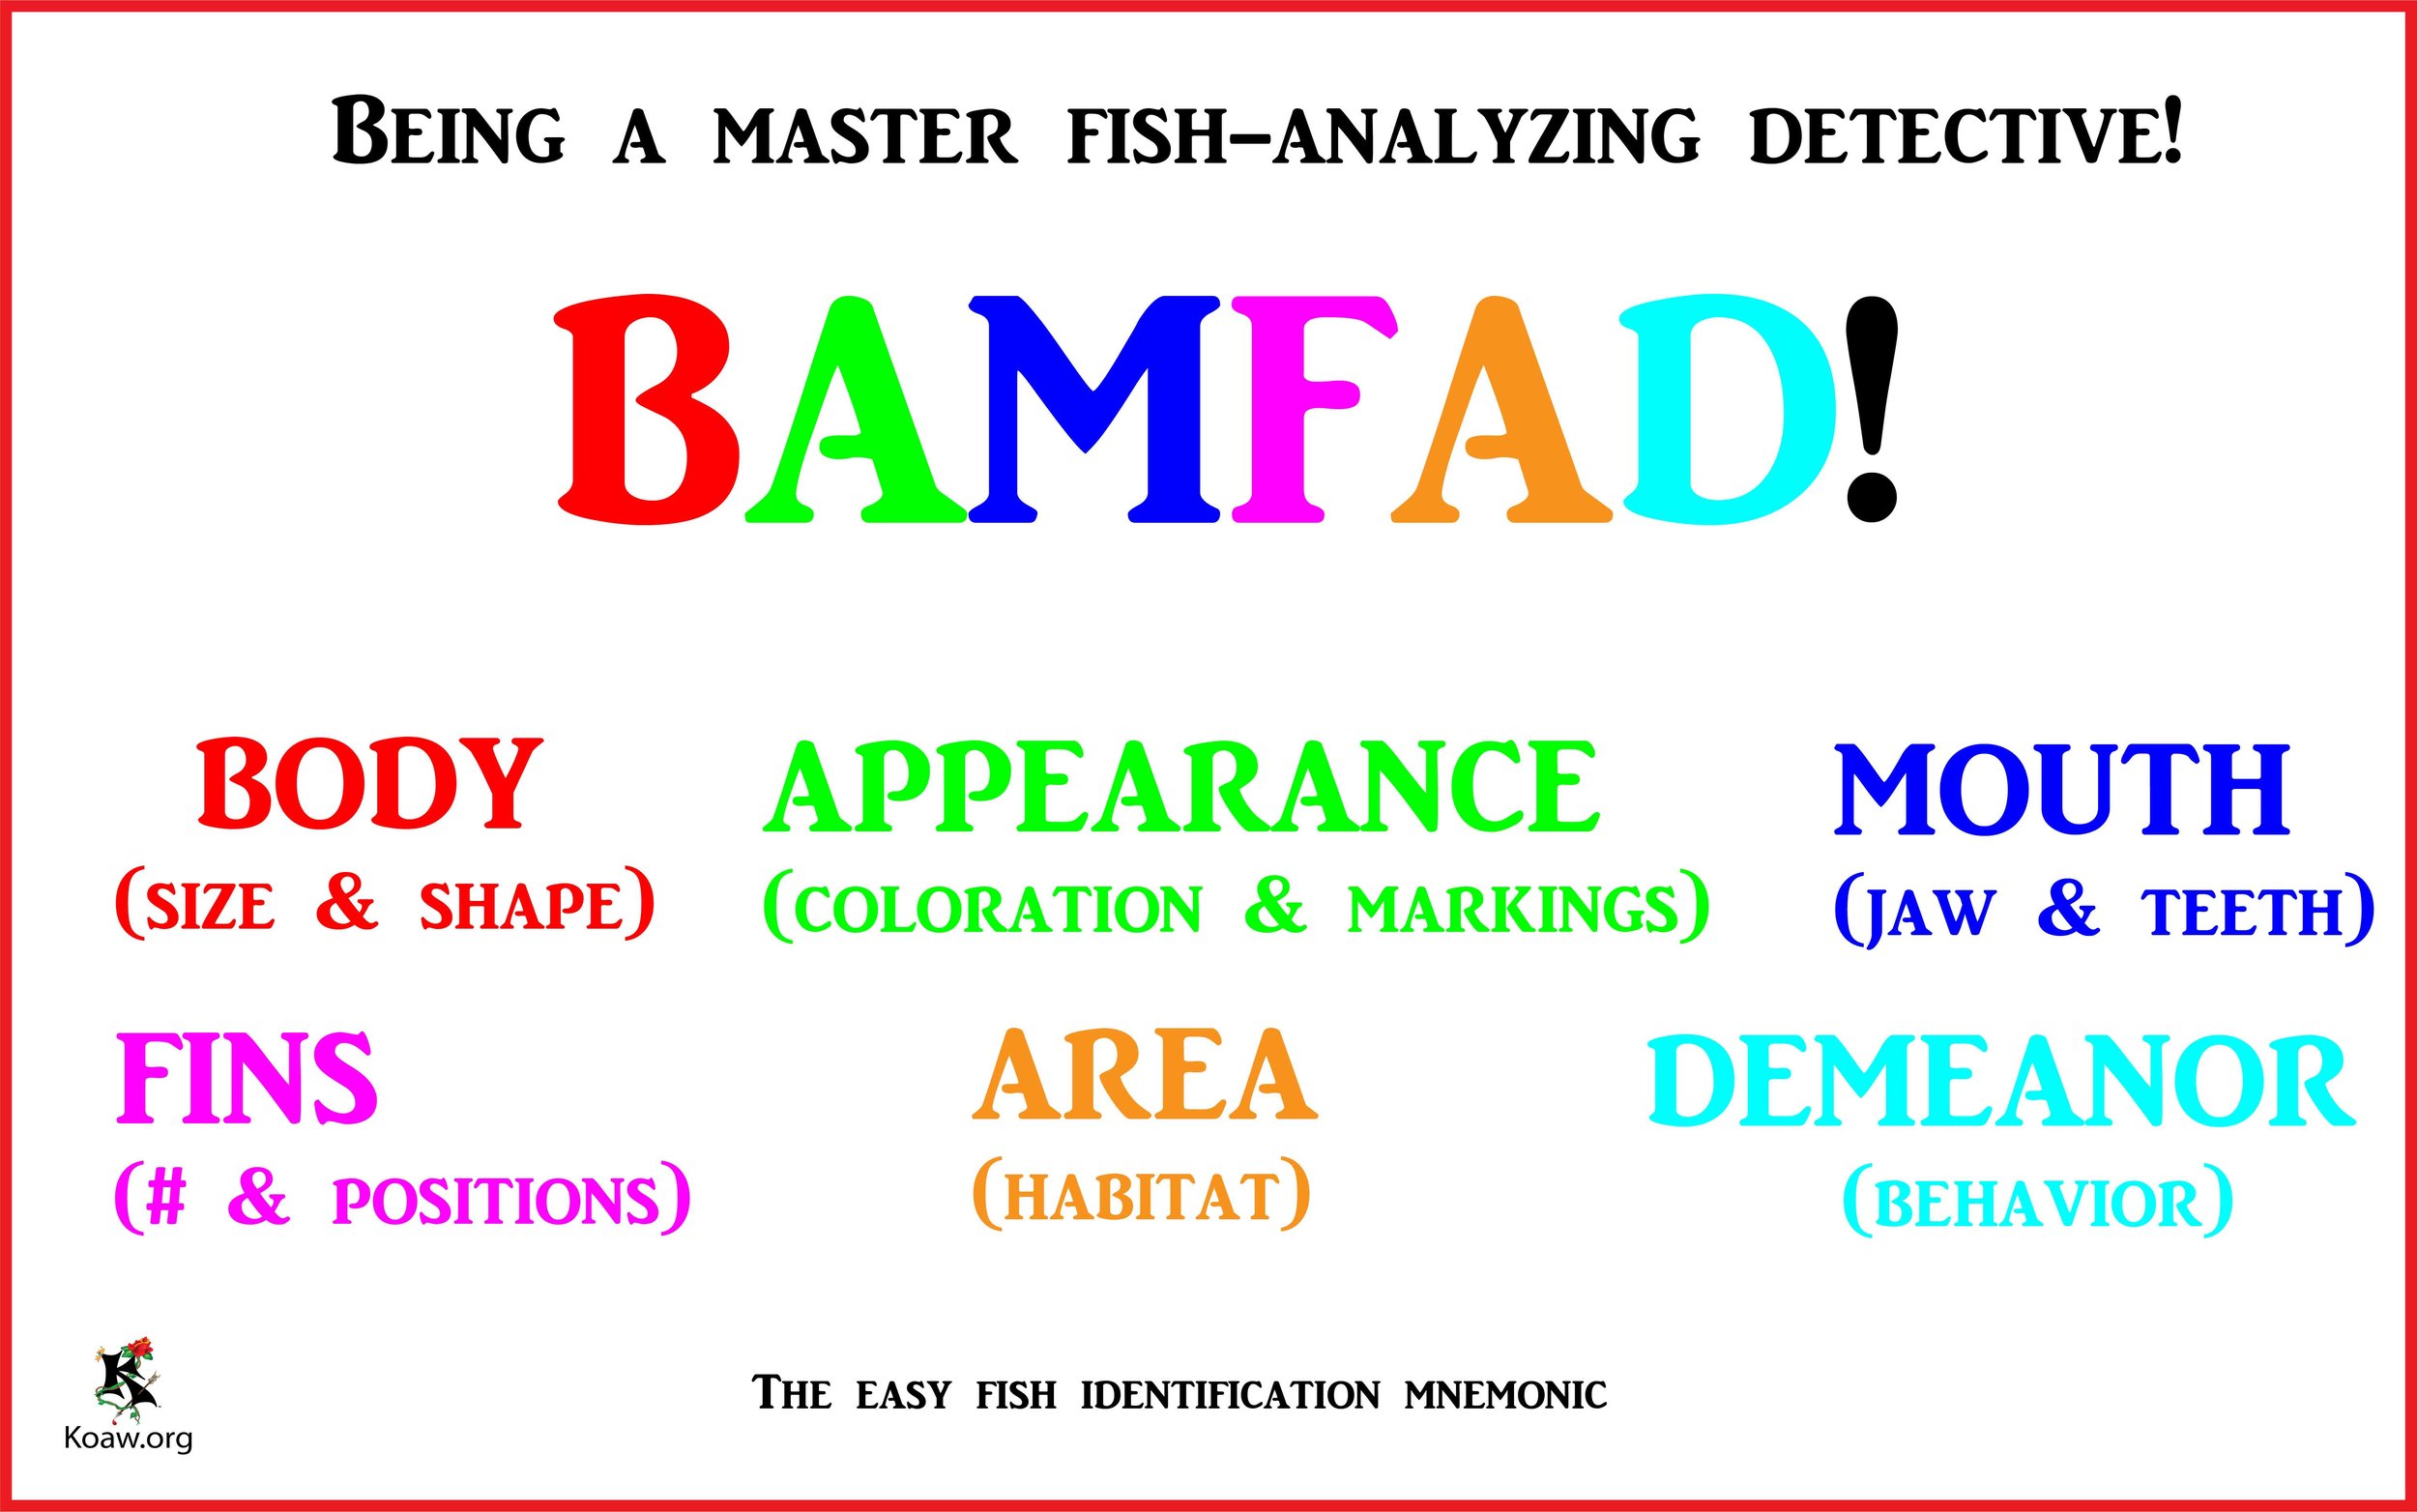 BAMFAD Being a master fish-analyzing detective! - by Koaw